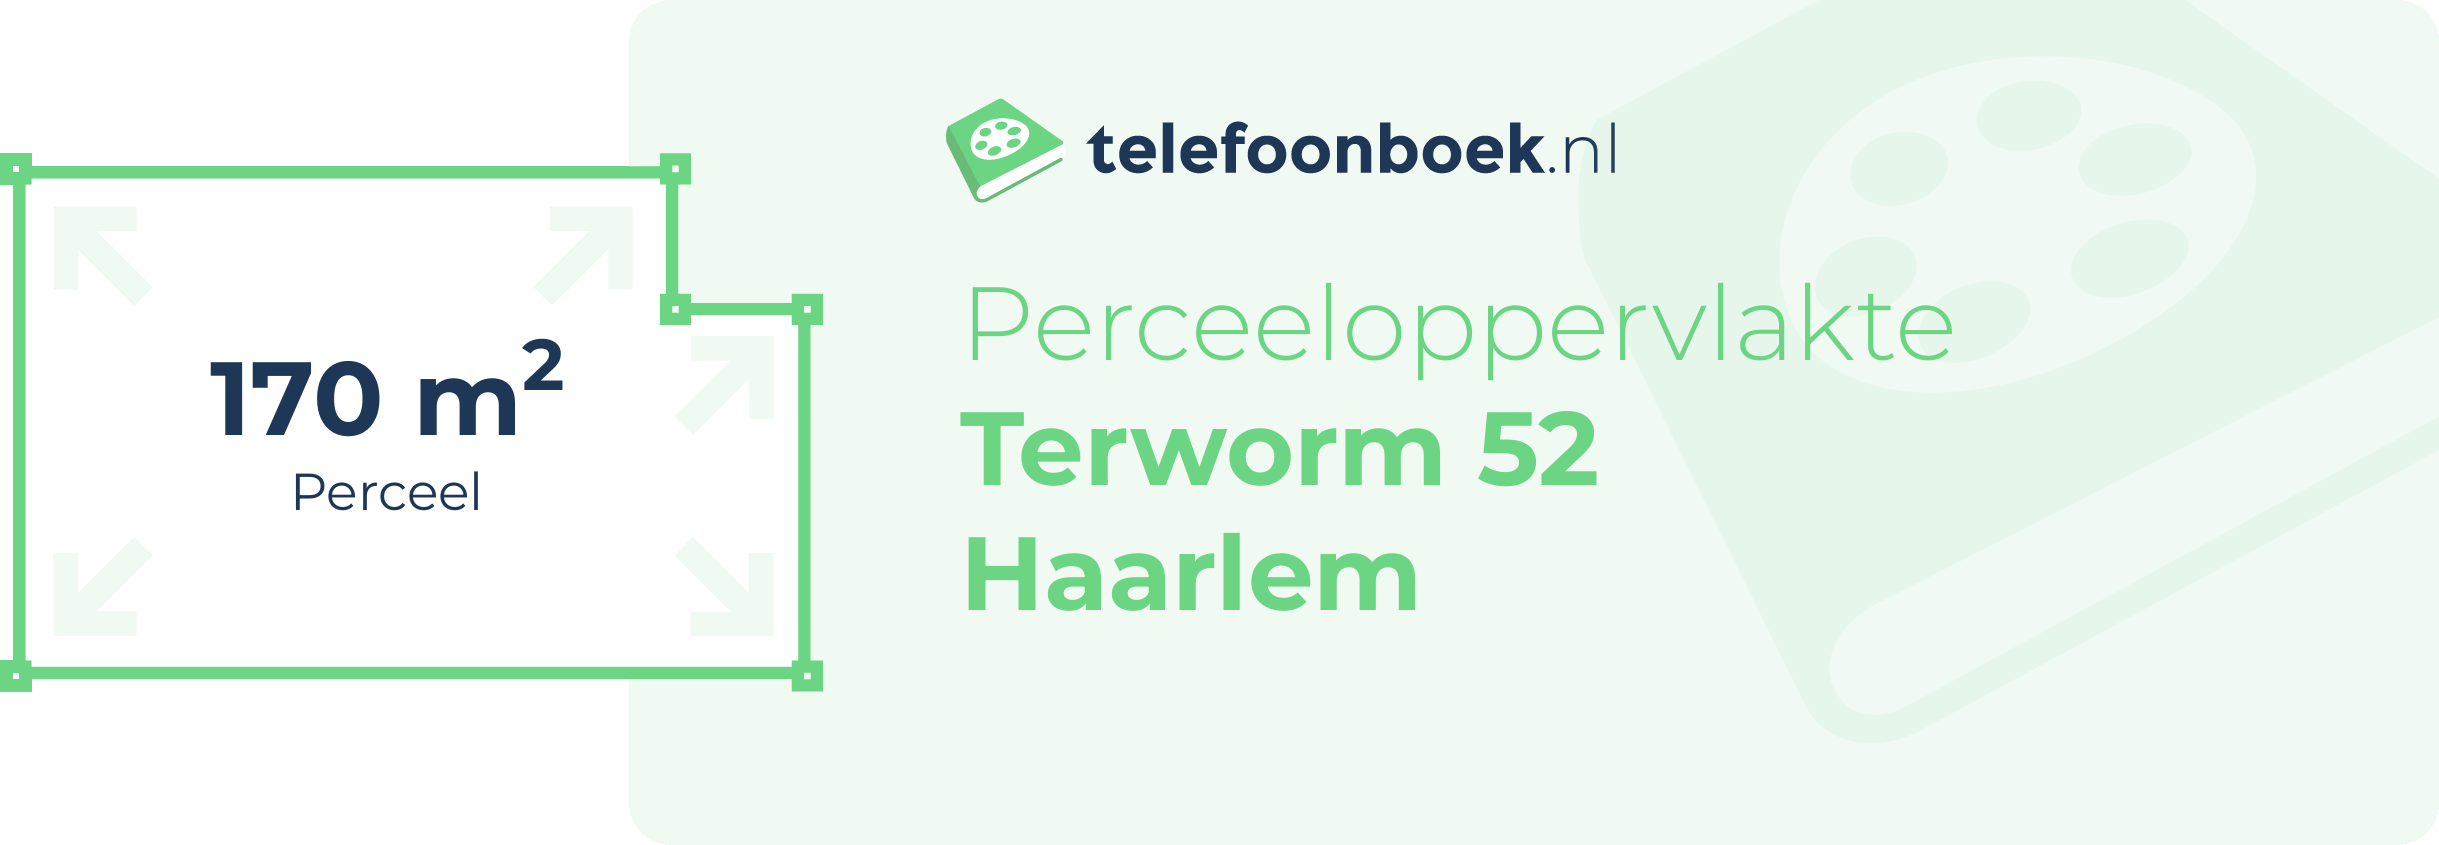 Perceeloppervlakte Terworm 52 Haarlem